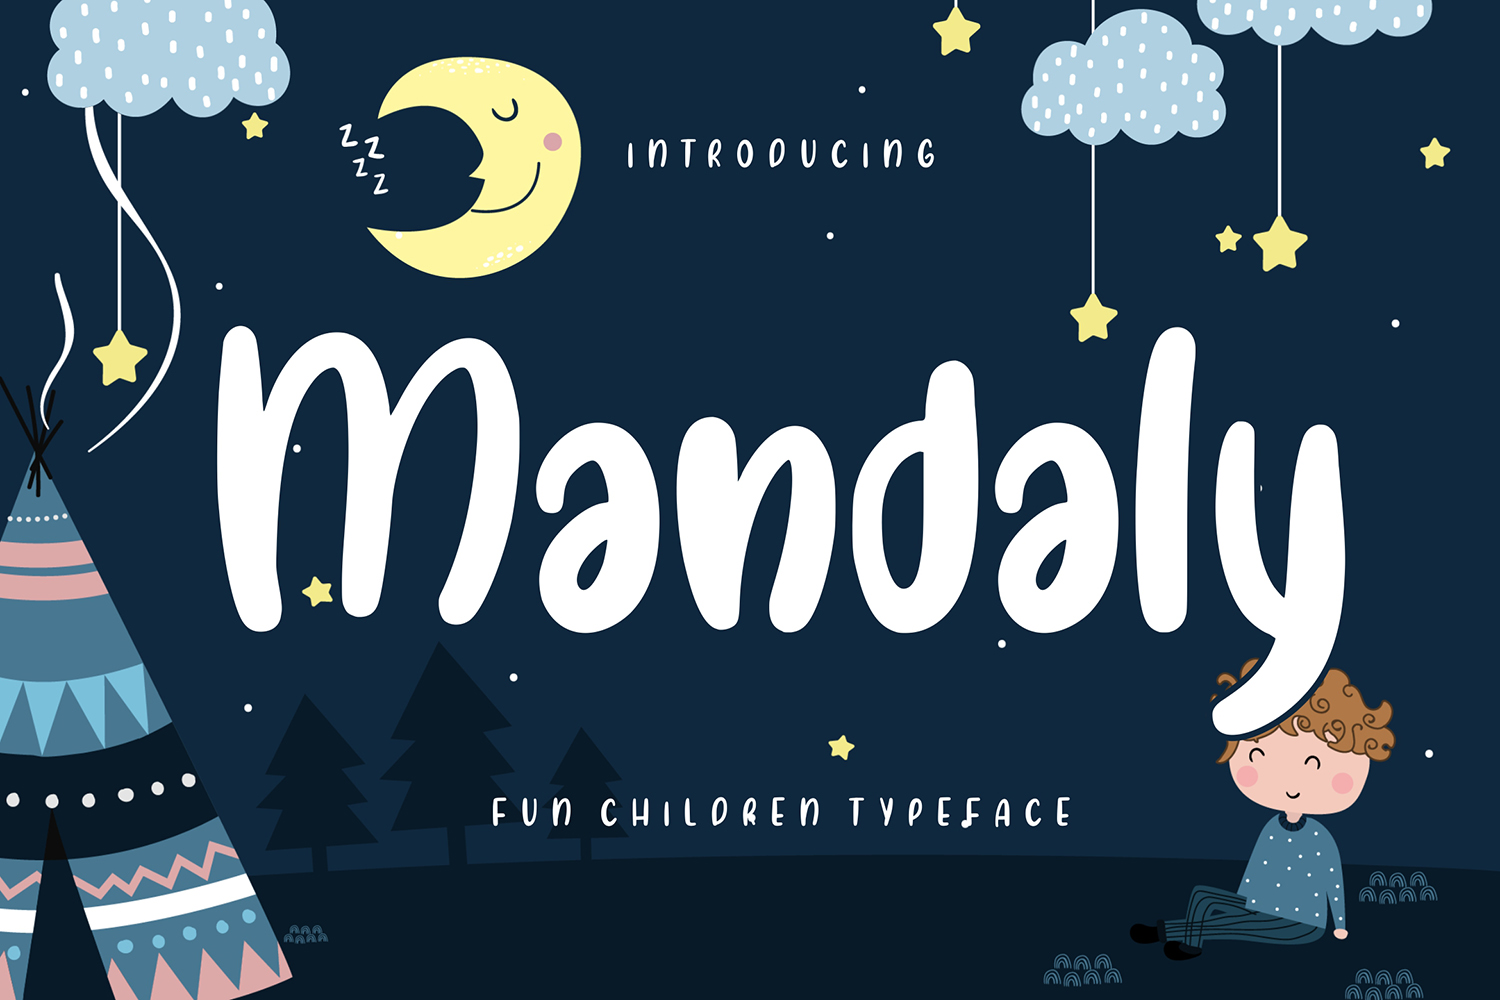 Mandaly Free Font